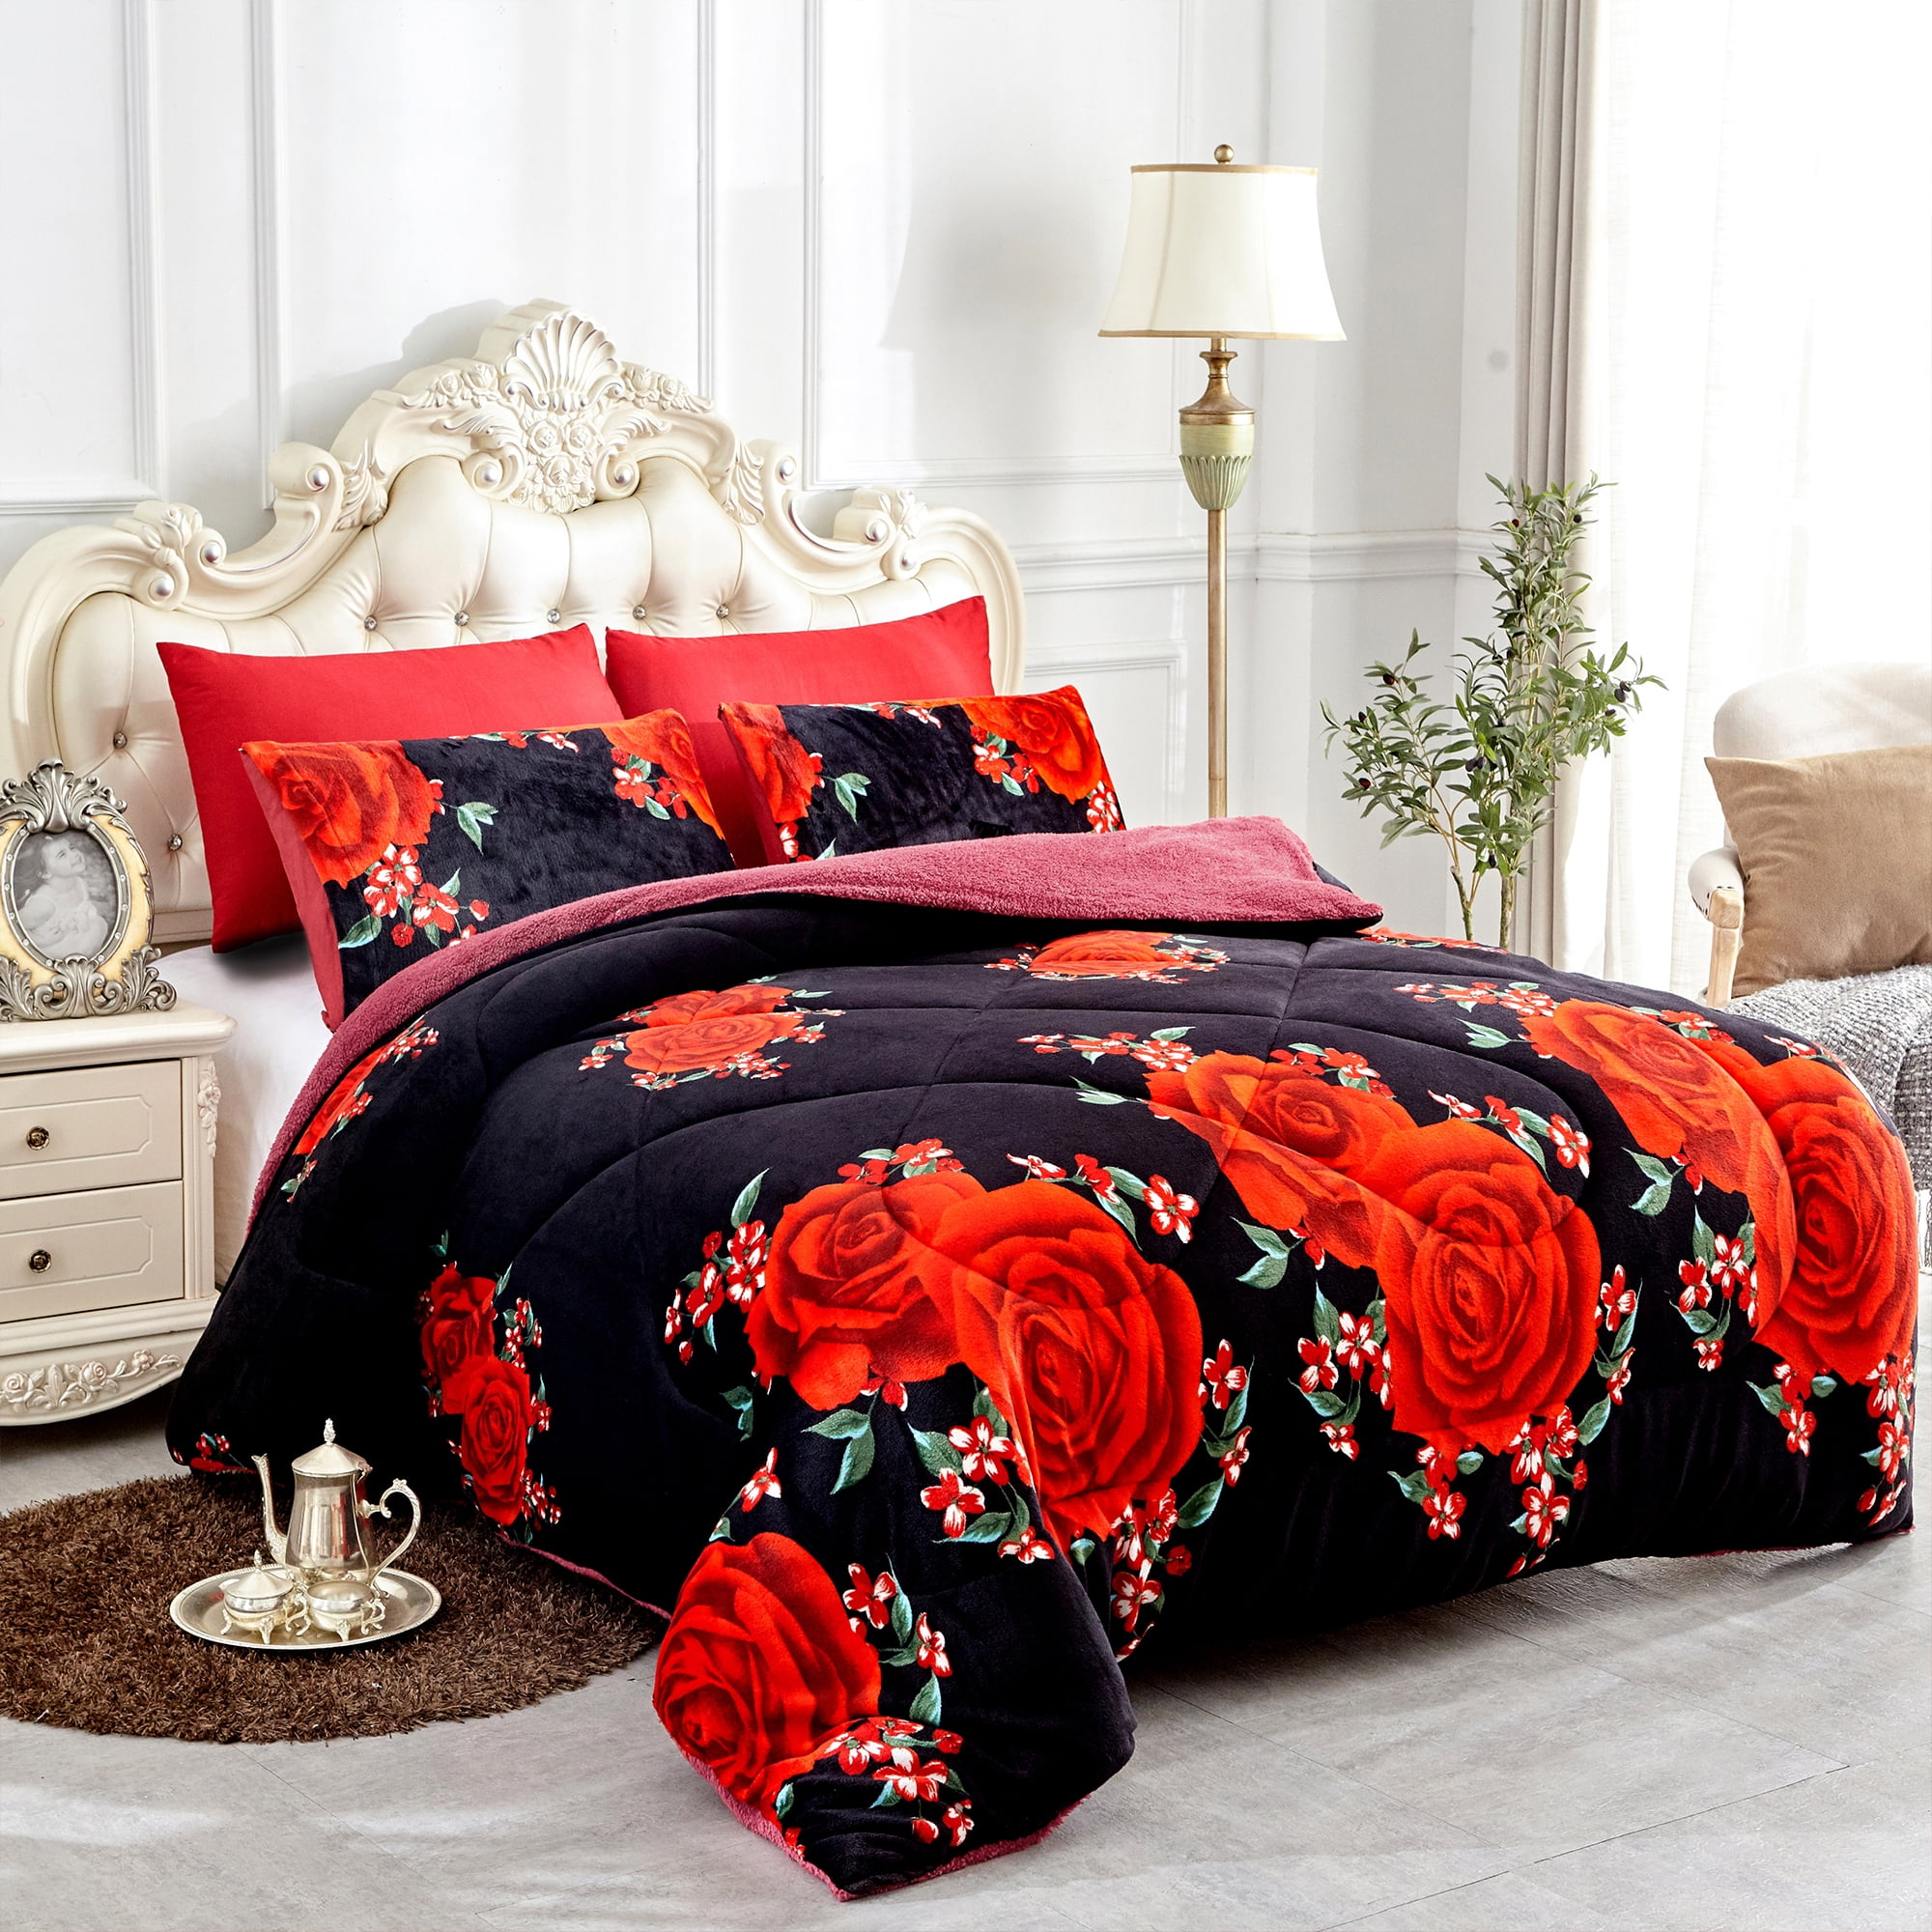 Cal King Comforter Set W 2 Decorative Shams Soft Plush Sherpa Blanket 87"x95" 